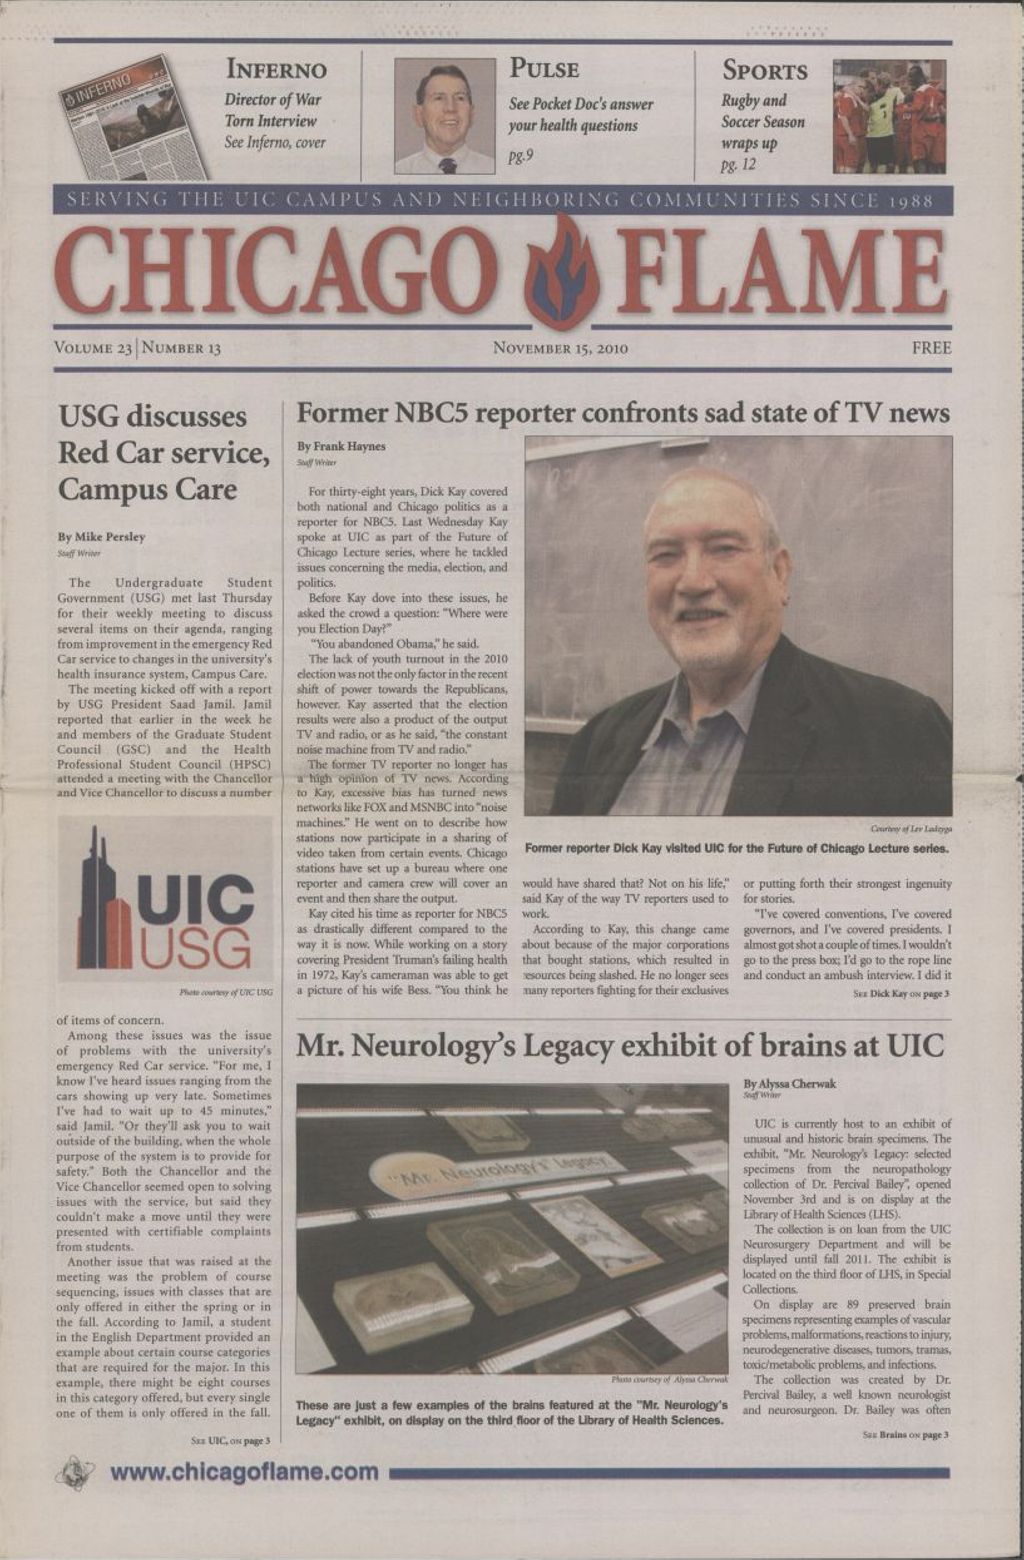 Miniature of Chicago Flame (November 15, 2010)